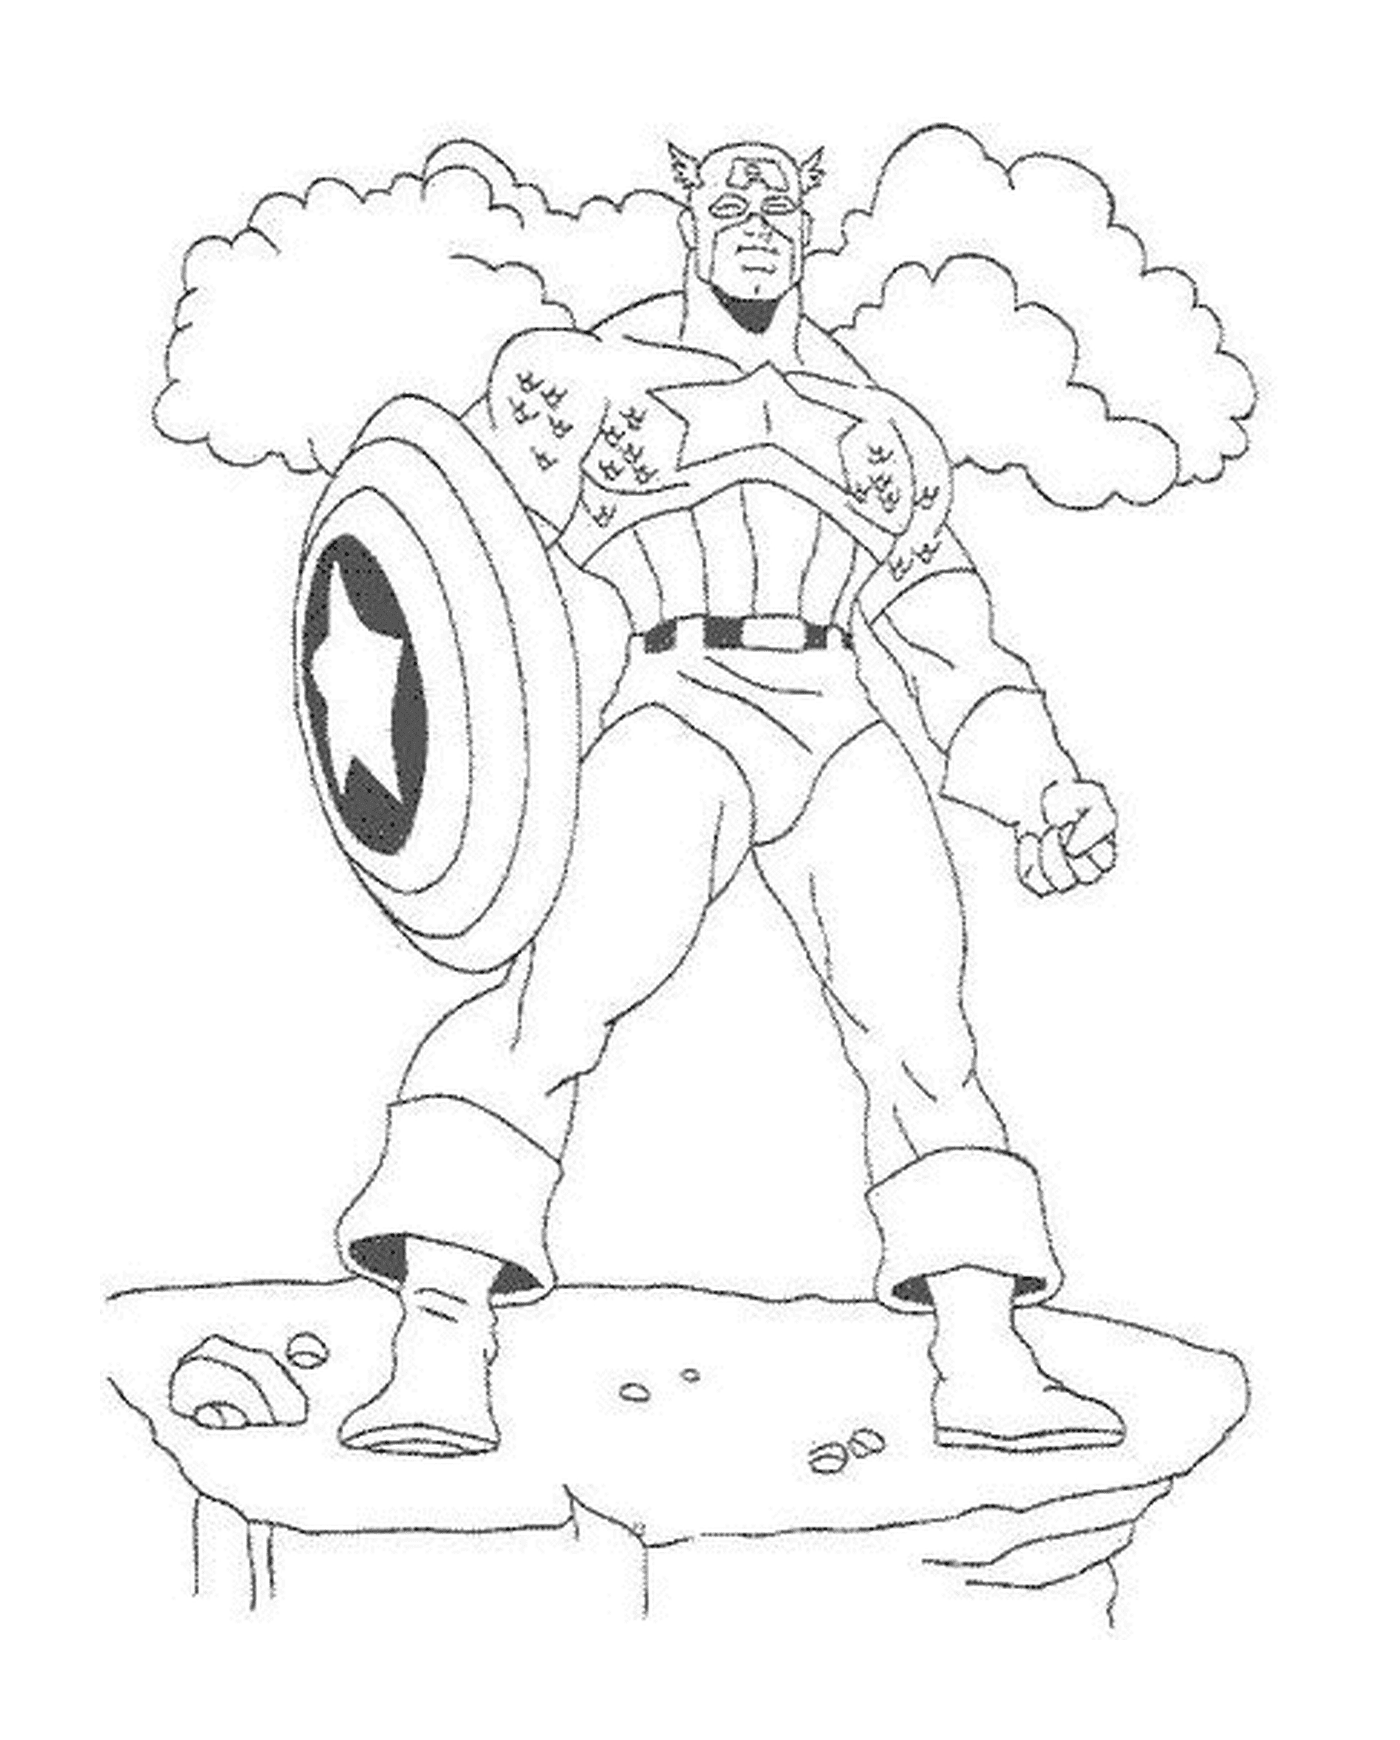  Captain America with his vibranium shield, image of a Captain America 